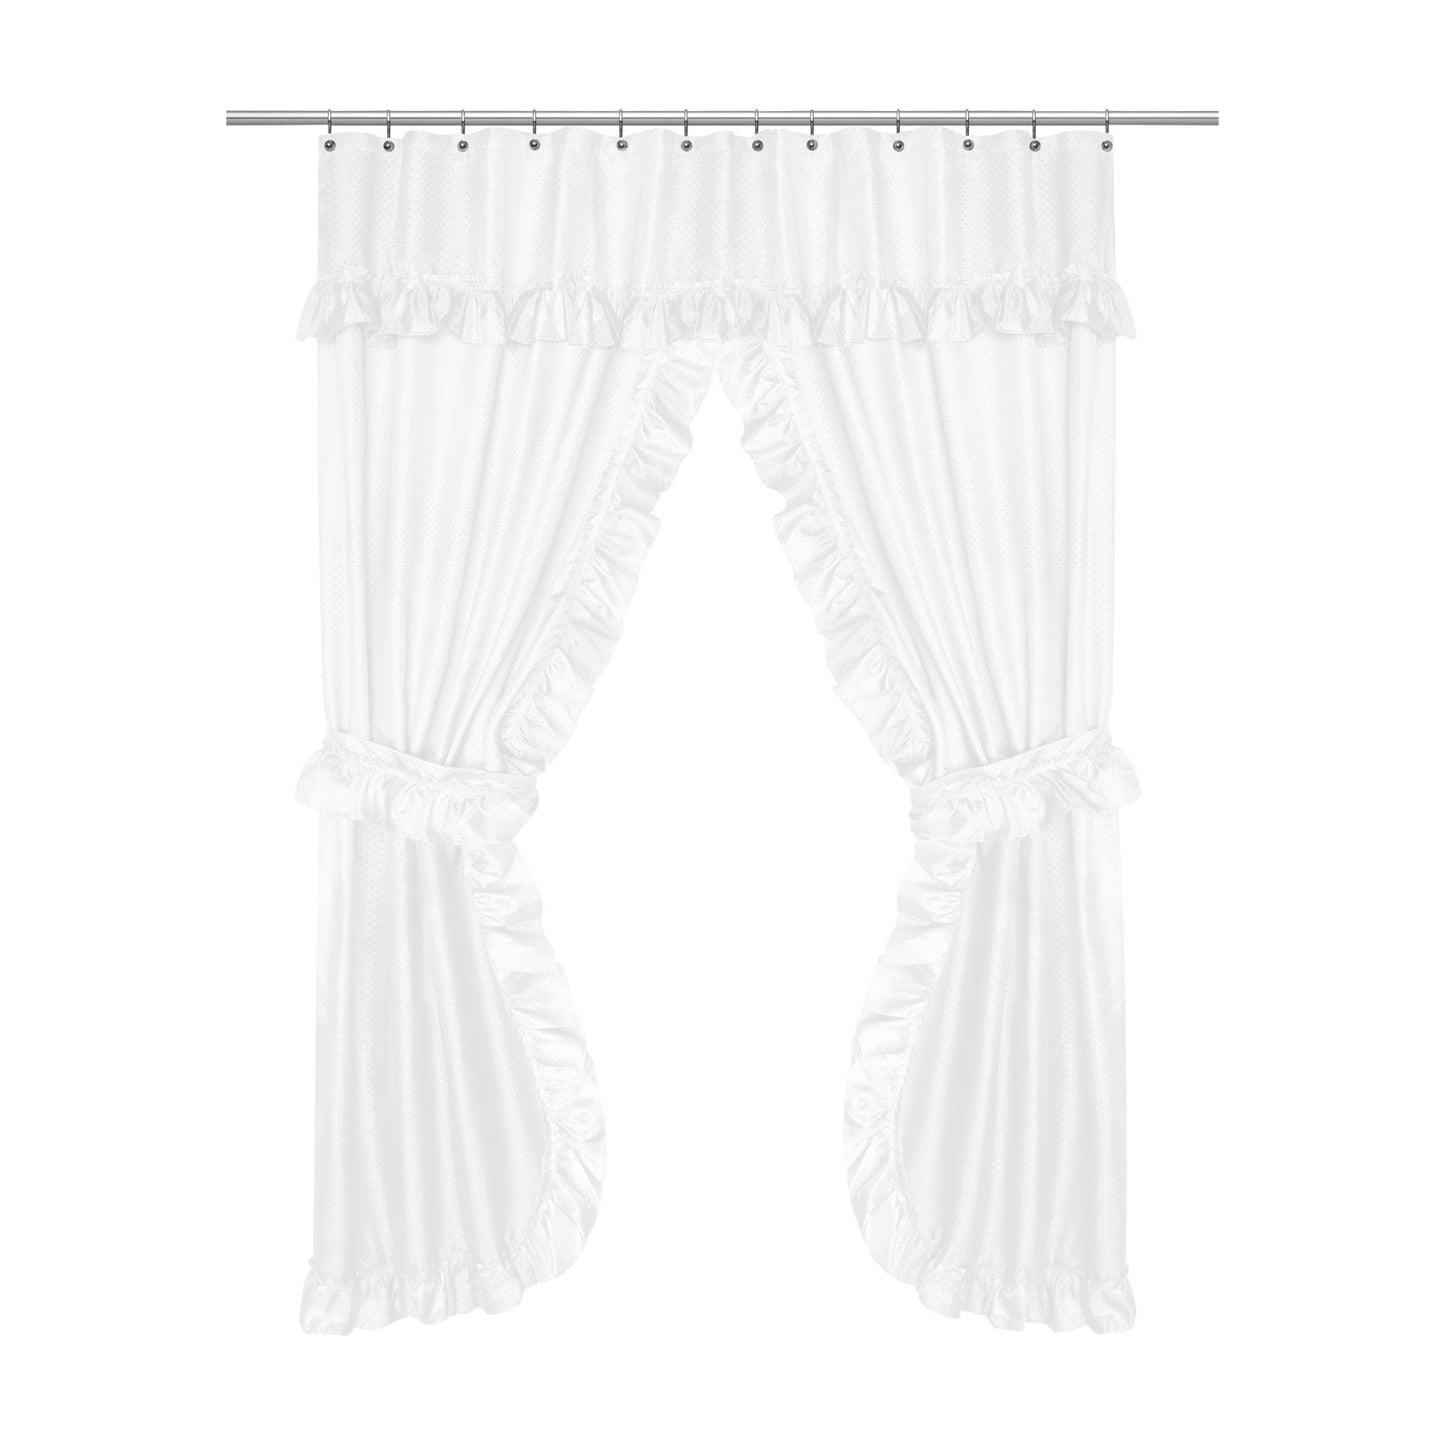 Complete Shower Curtain Set 18pc